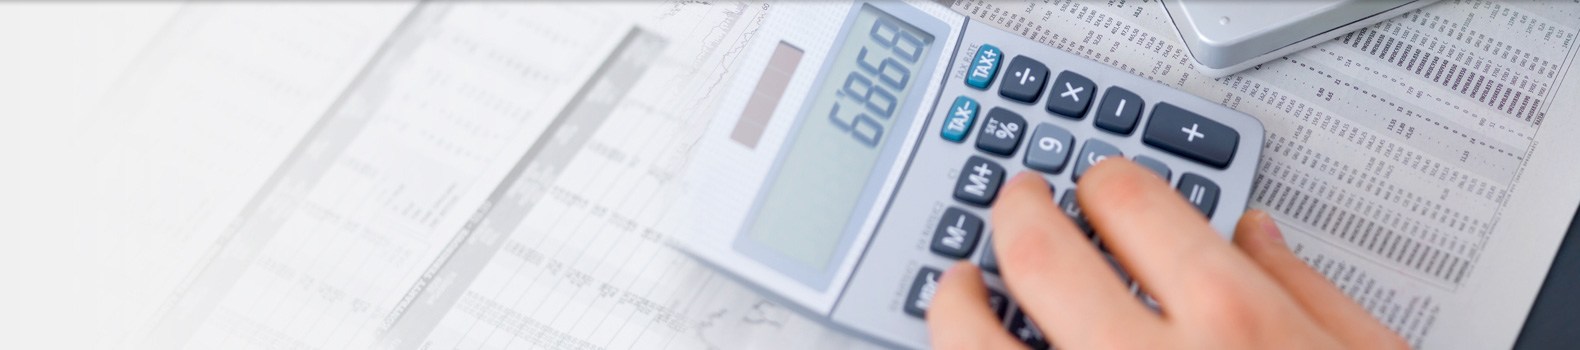 Borrow mortgages instalment calculator masthead